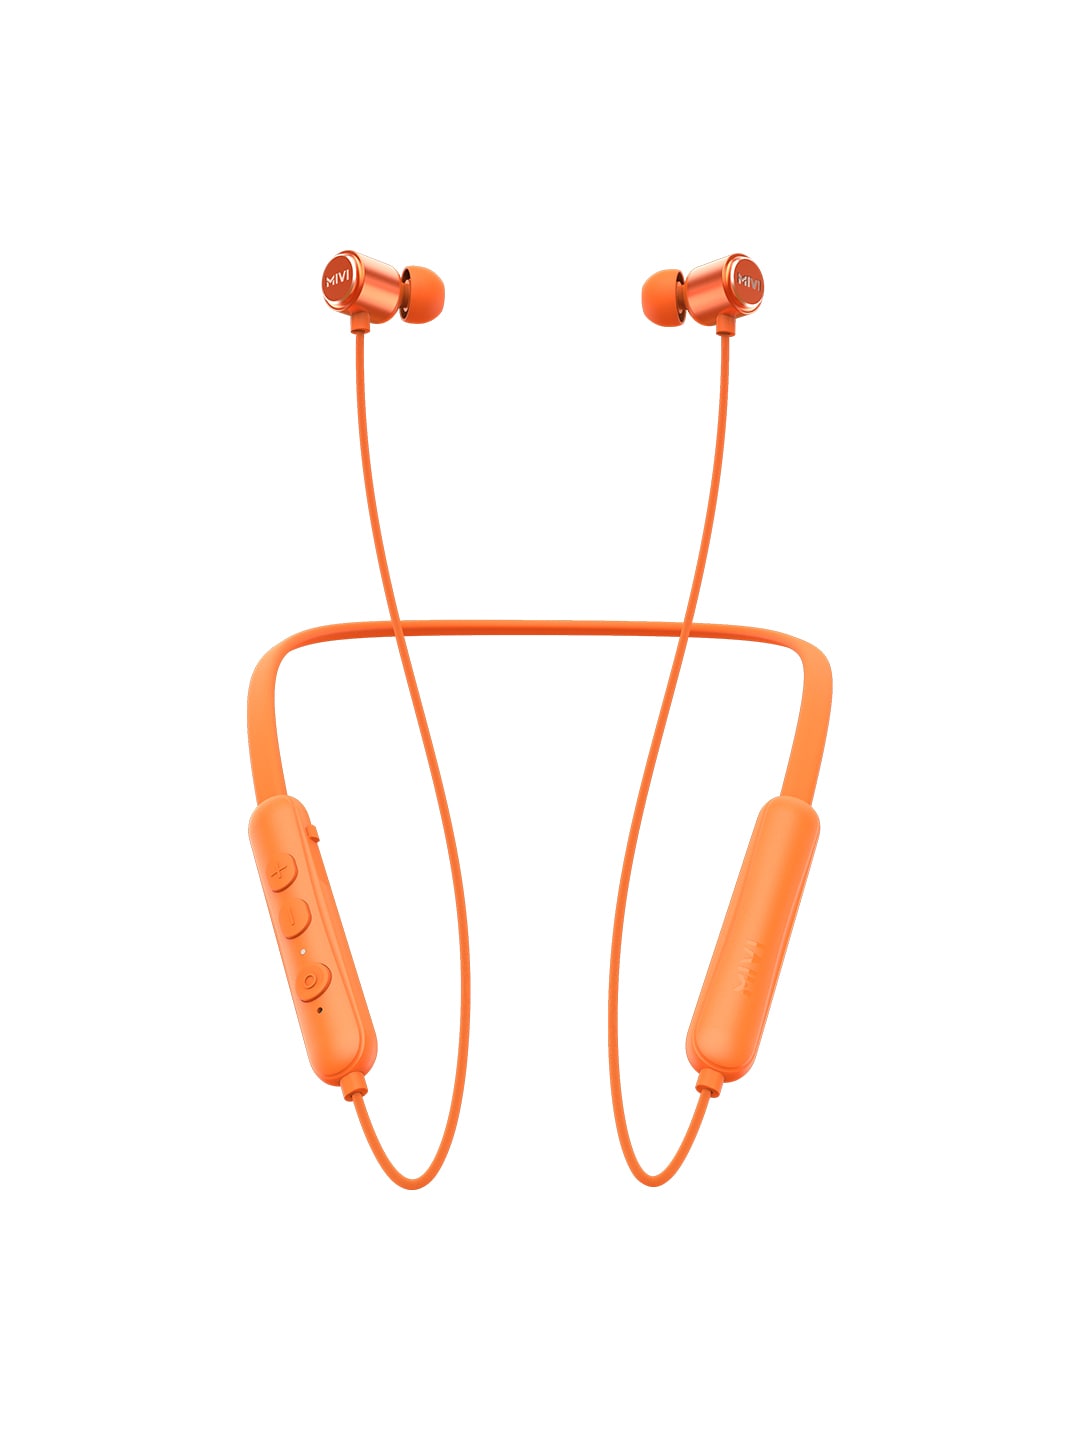 mivi Collar Flash Wireless Earphones with Mic & Fast Charging - Orange Price in India